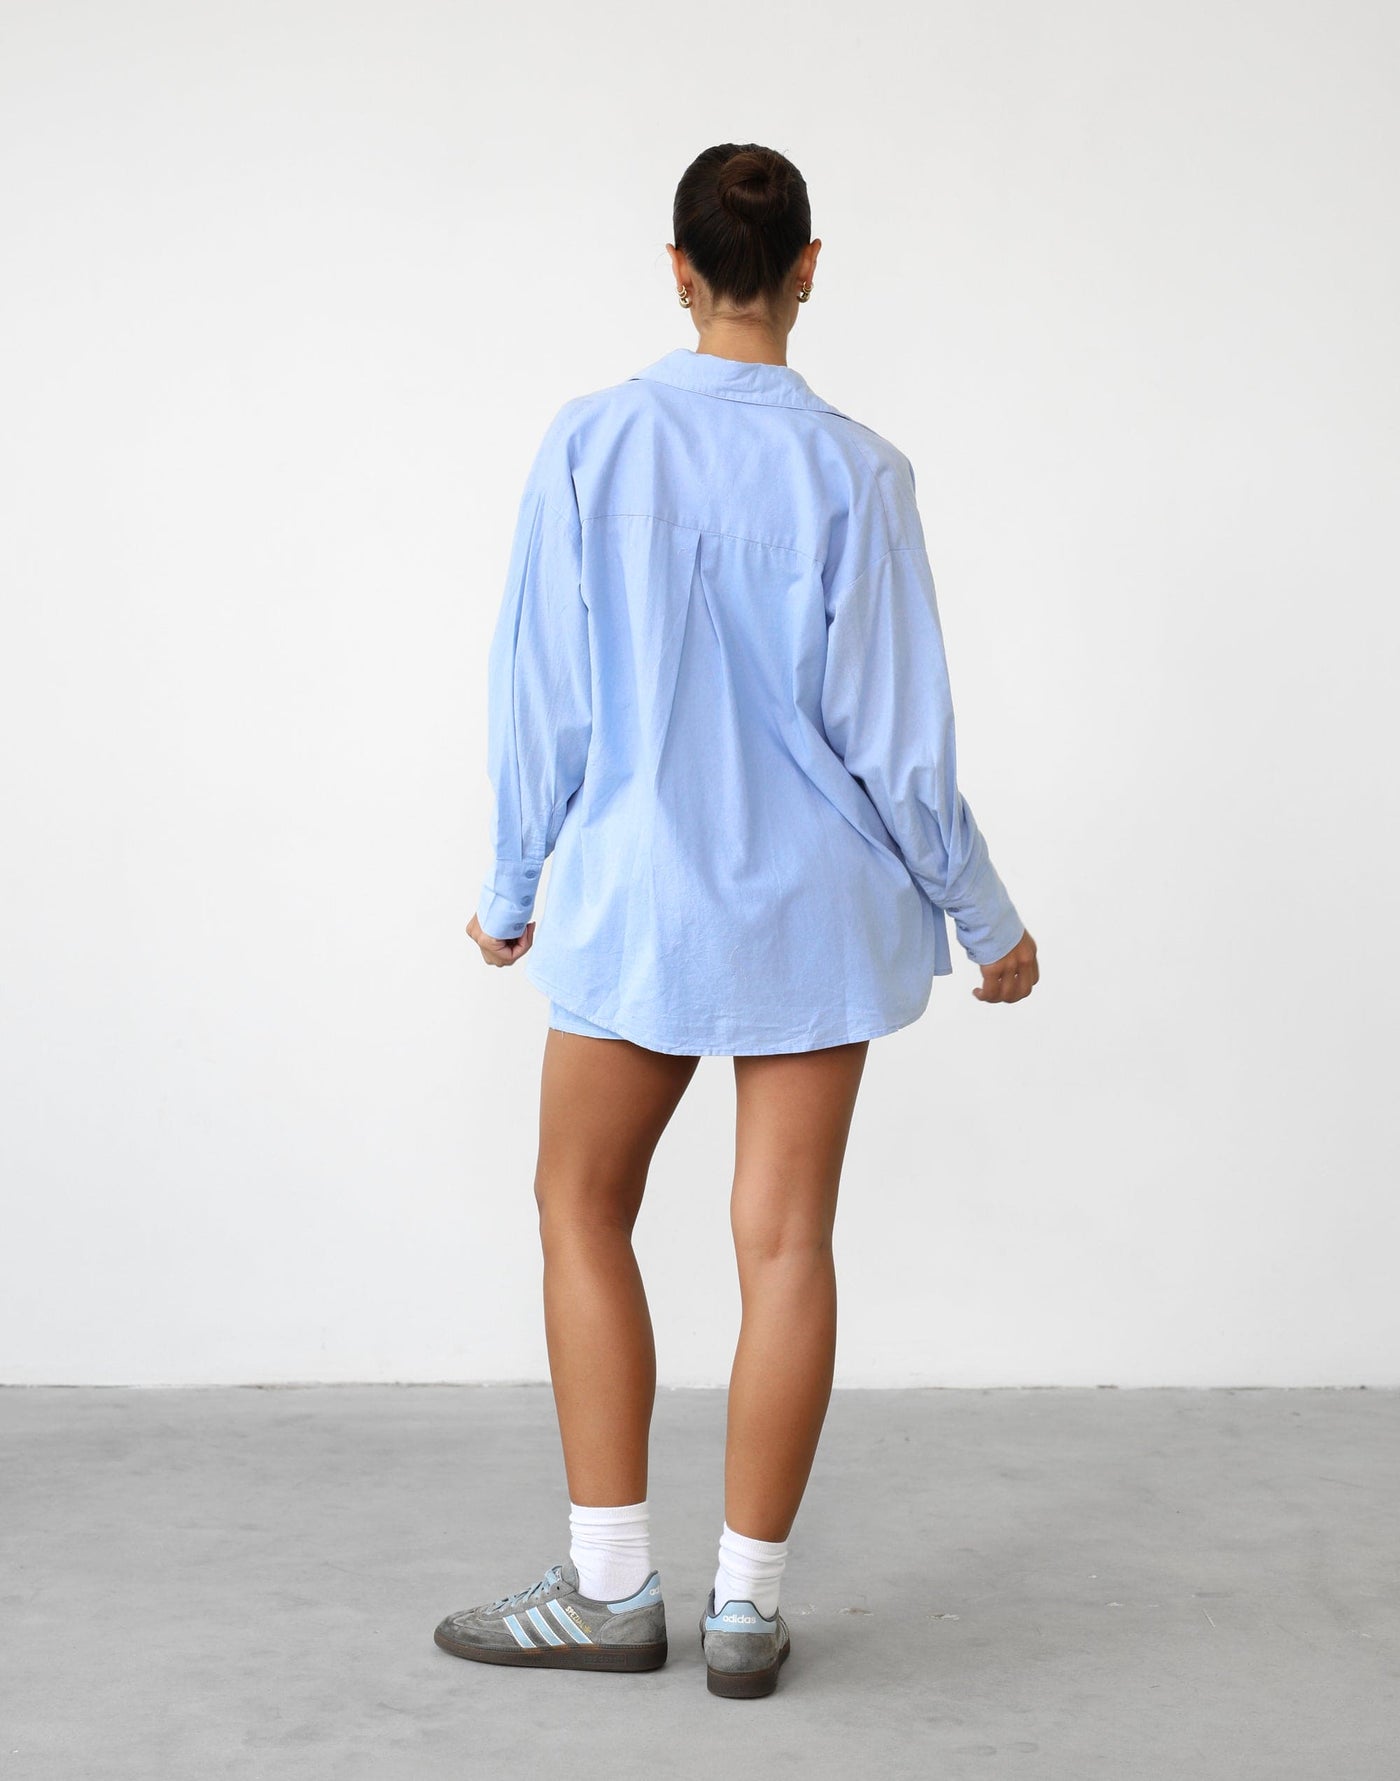 Asma Set (Blue) - Long Sleeve Button Up Shirt and Shorts Set - Women's Sets - Charcoal Clothing